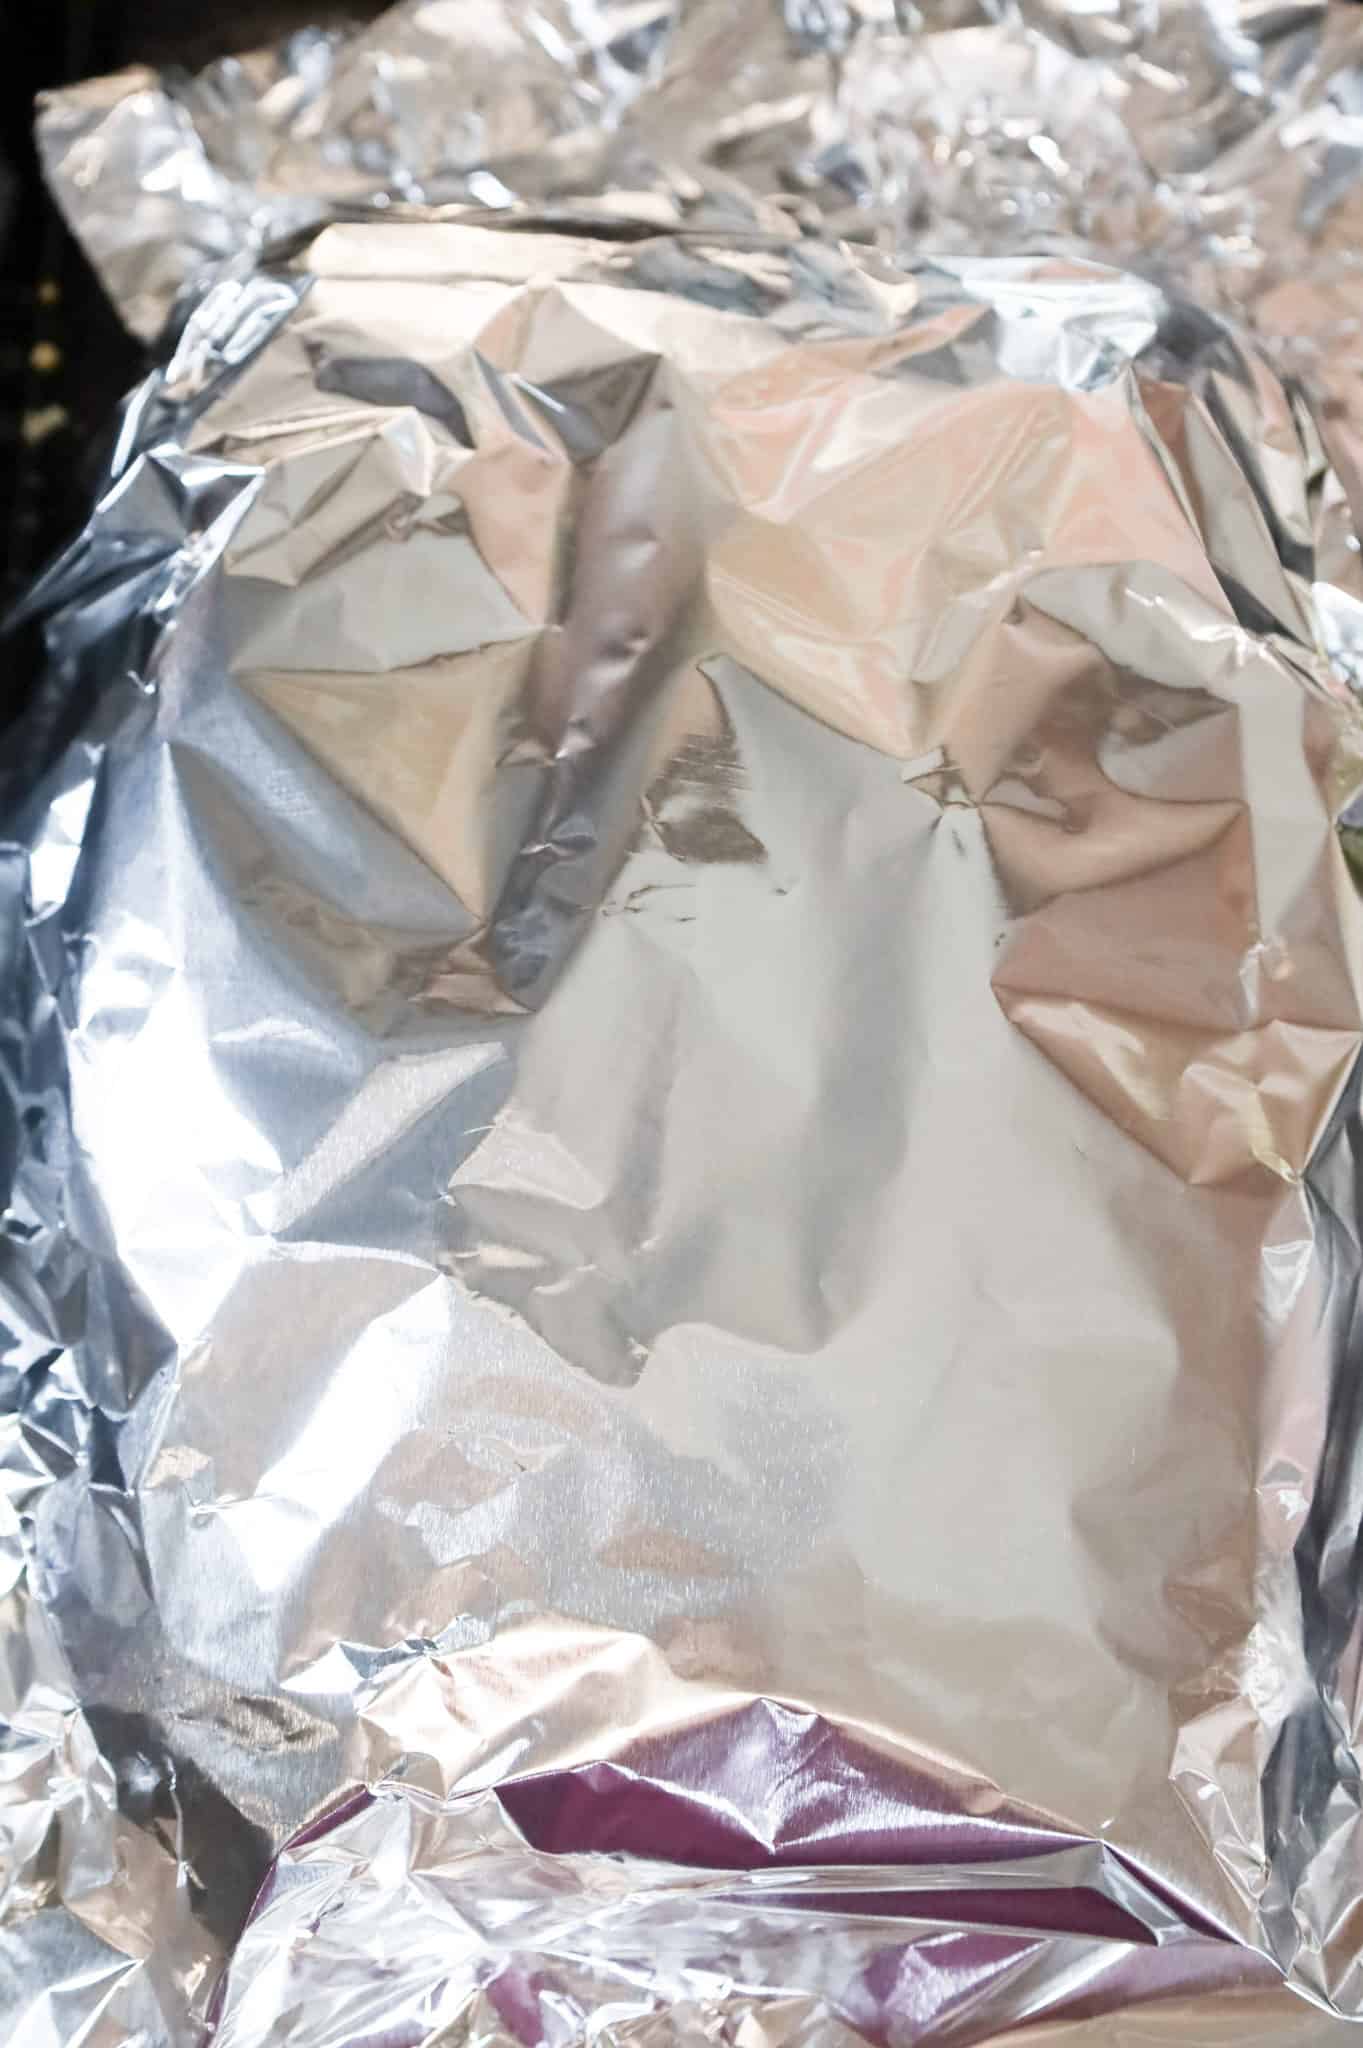 aluminum foil covering breakfast sliders on a baking sheet